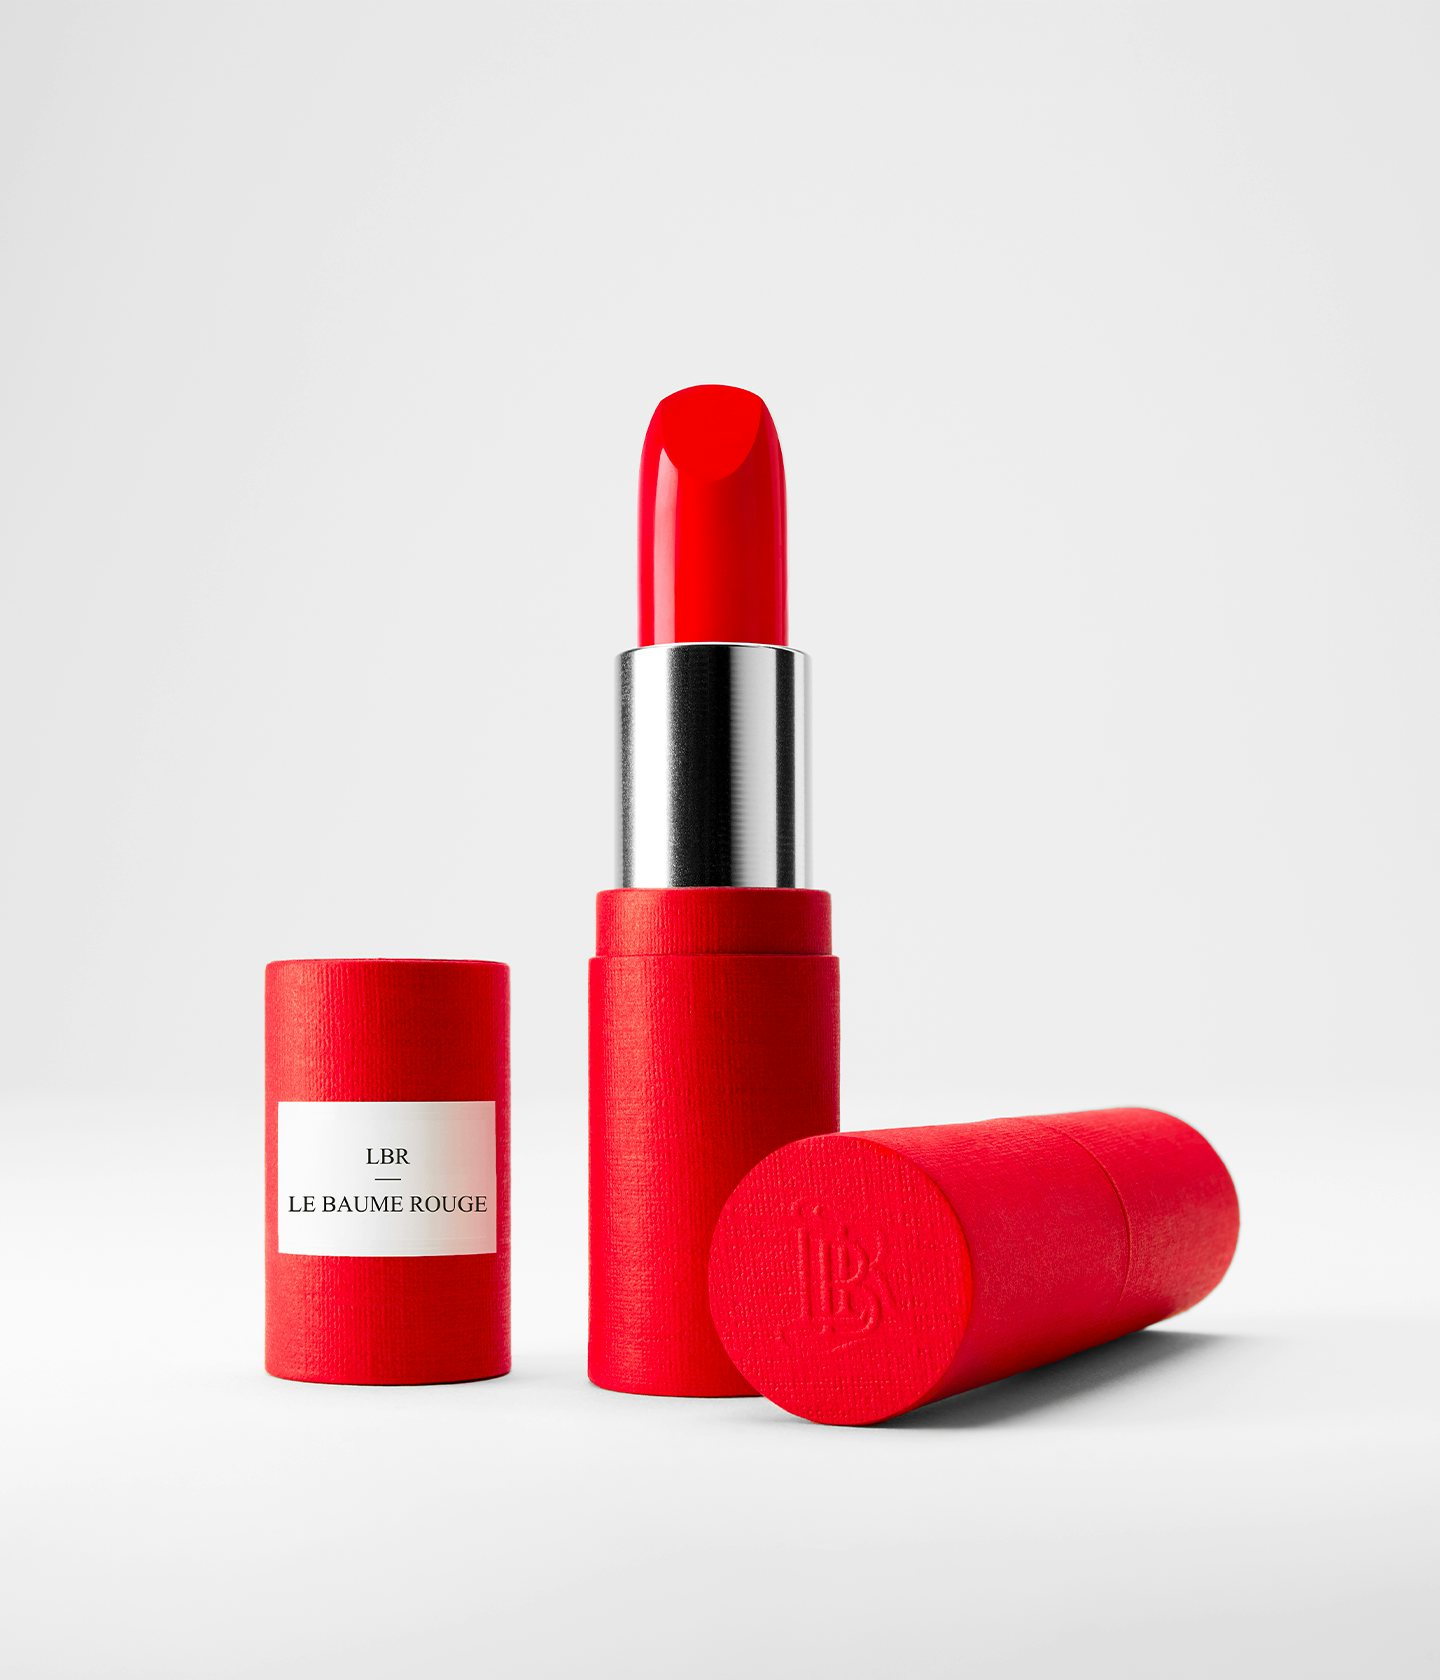 La bouche rouge Red balm lipstick in the red paper case